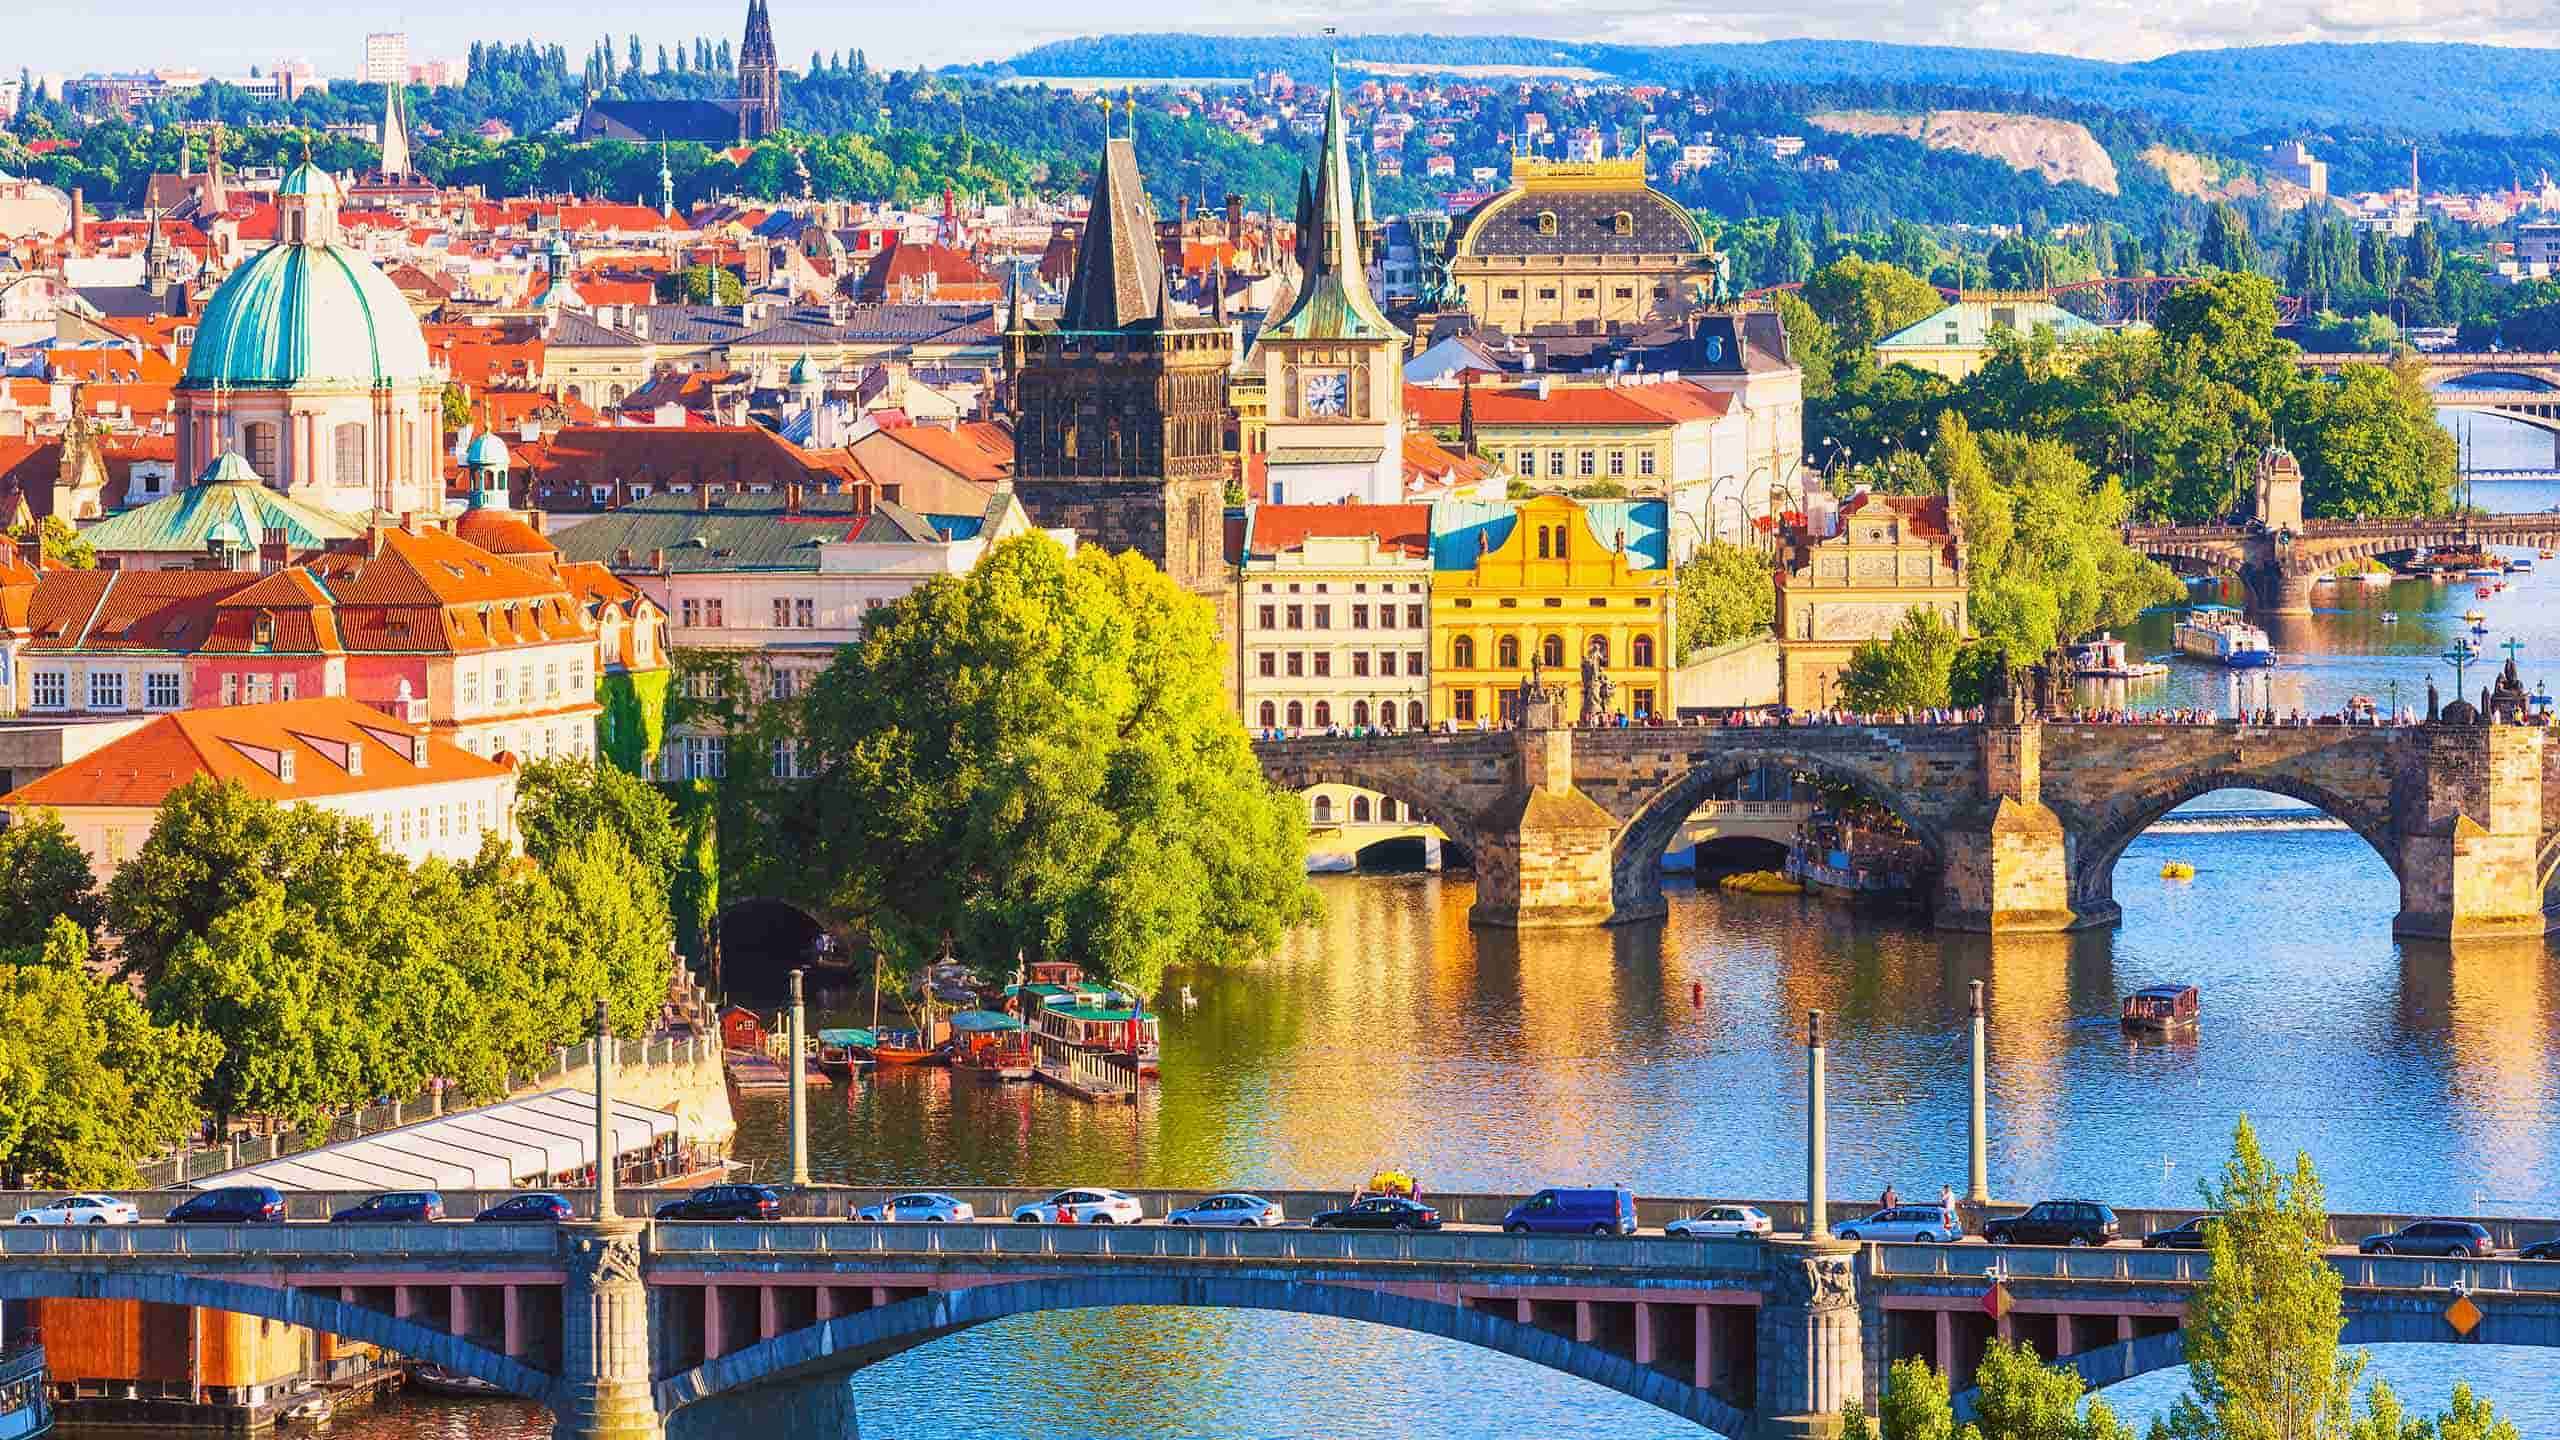 Festive Season Cruise In The Heart Of Germany With Prague (Prague To Frankfurt) 8D7N